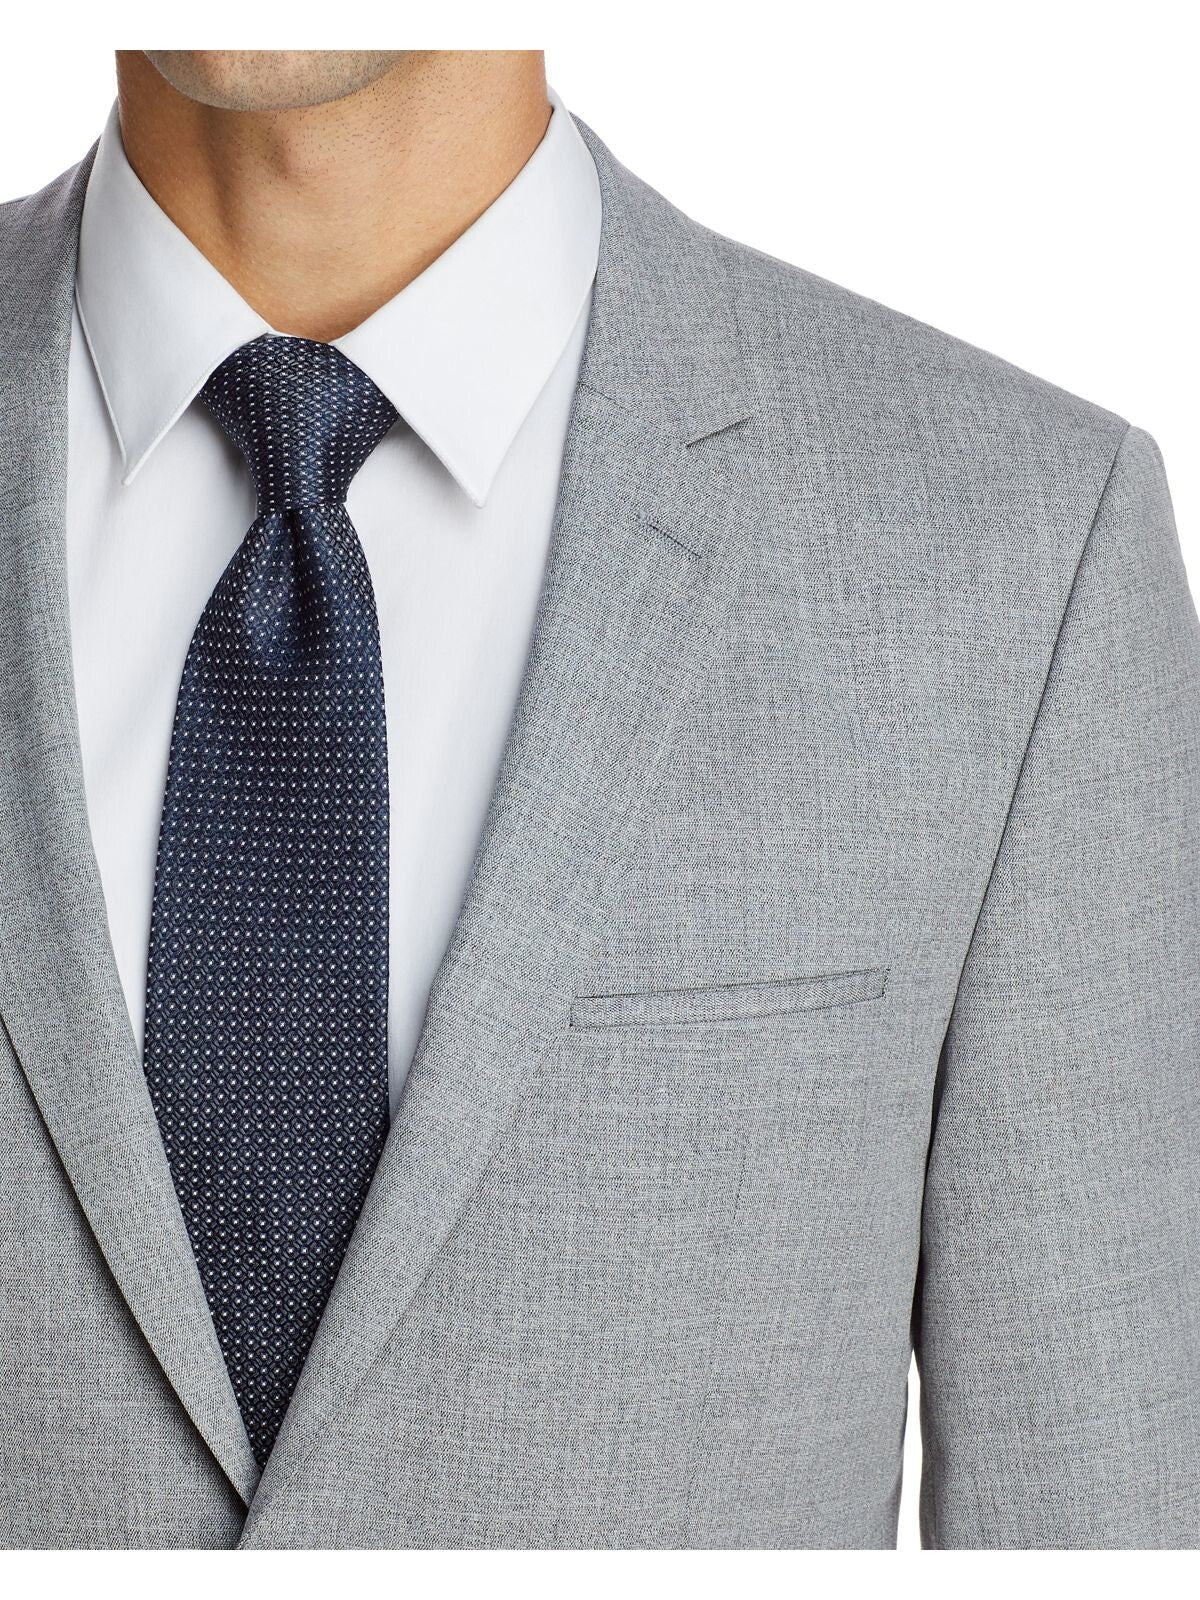 HUGO BOSS Mens Gray Single Breasted, Extra Slim Fit Suit Blazer 44R